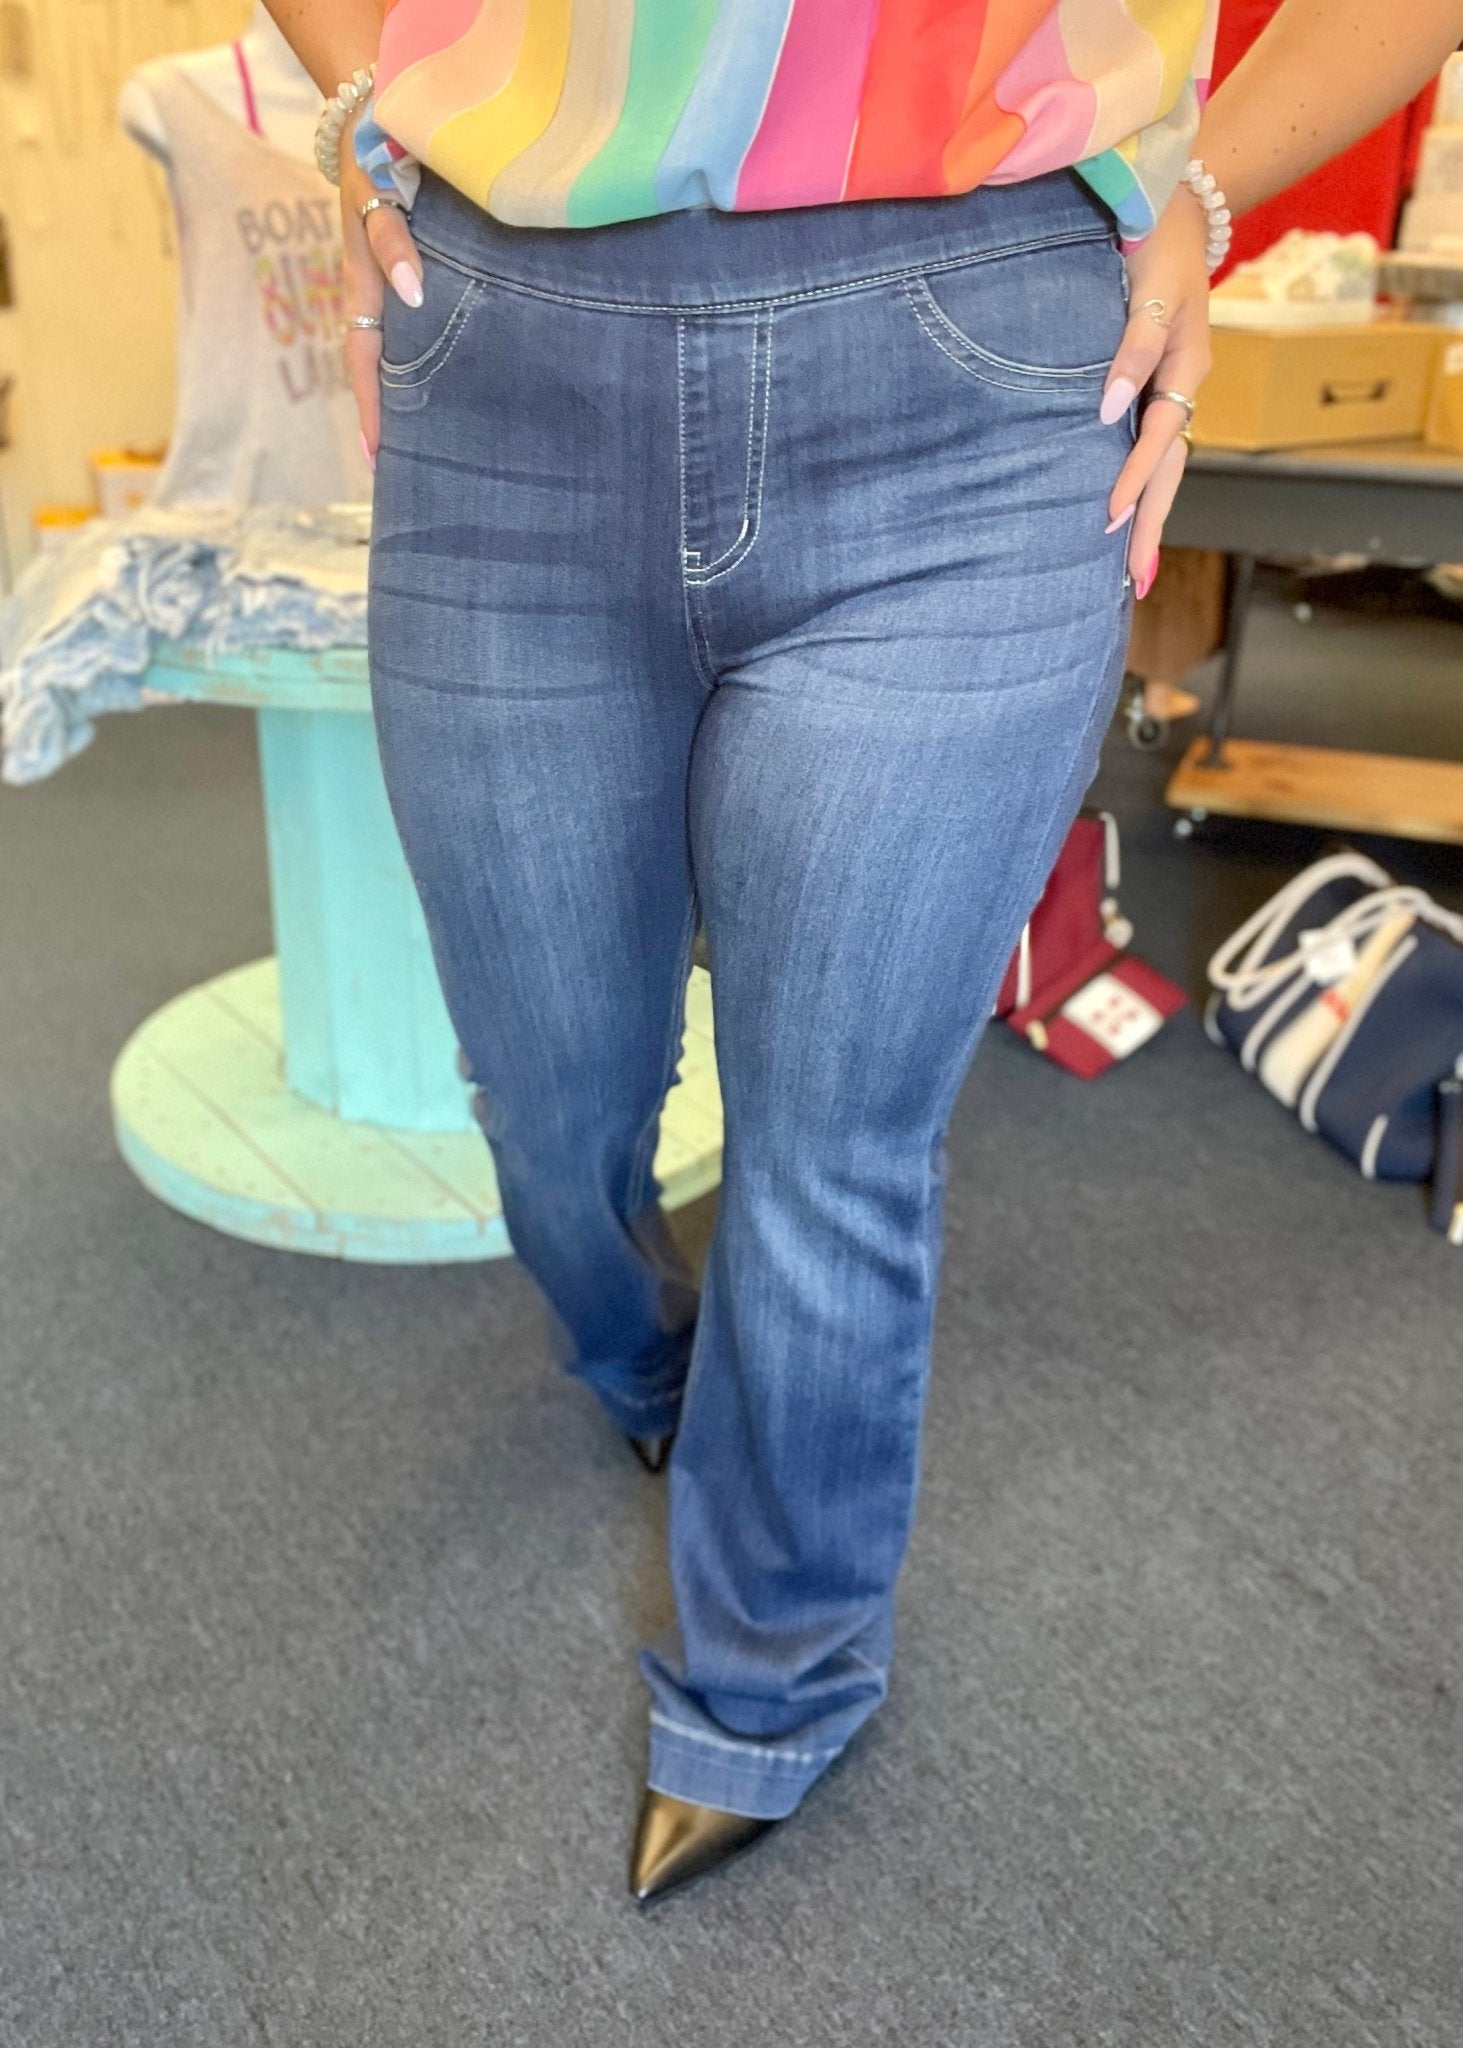 Cello Denim Flare Jeans - Medium Wash - 30" Inseam (Curvy Too) - Jimberly's Boutique